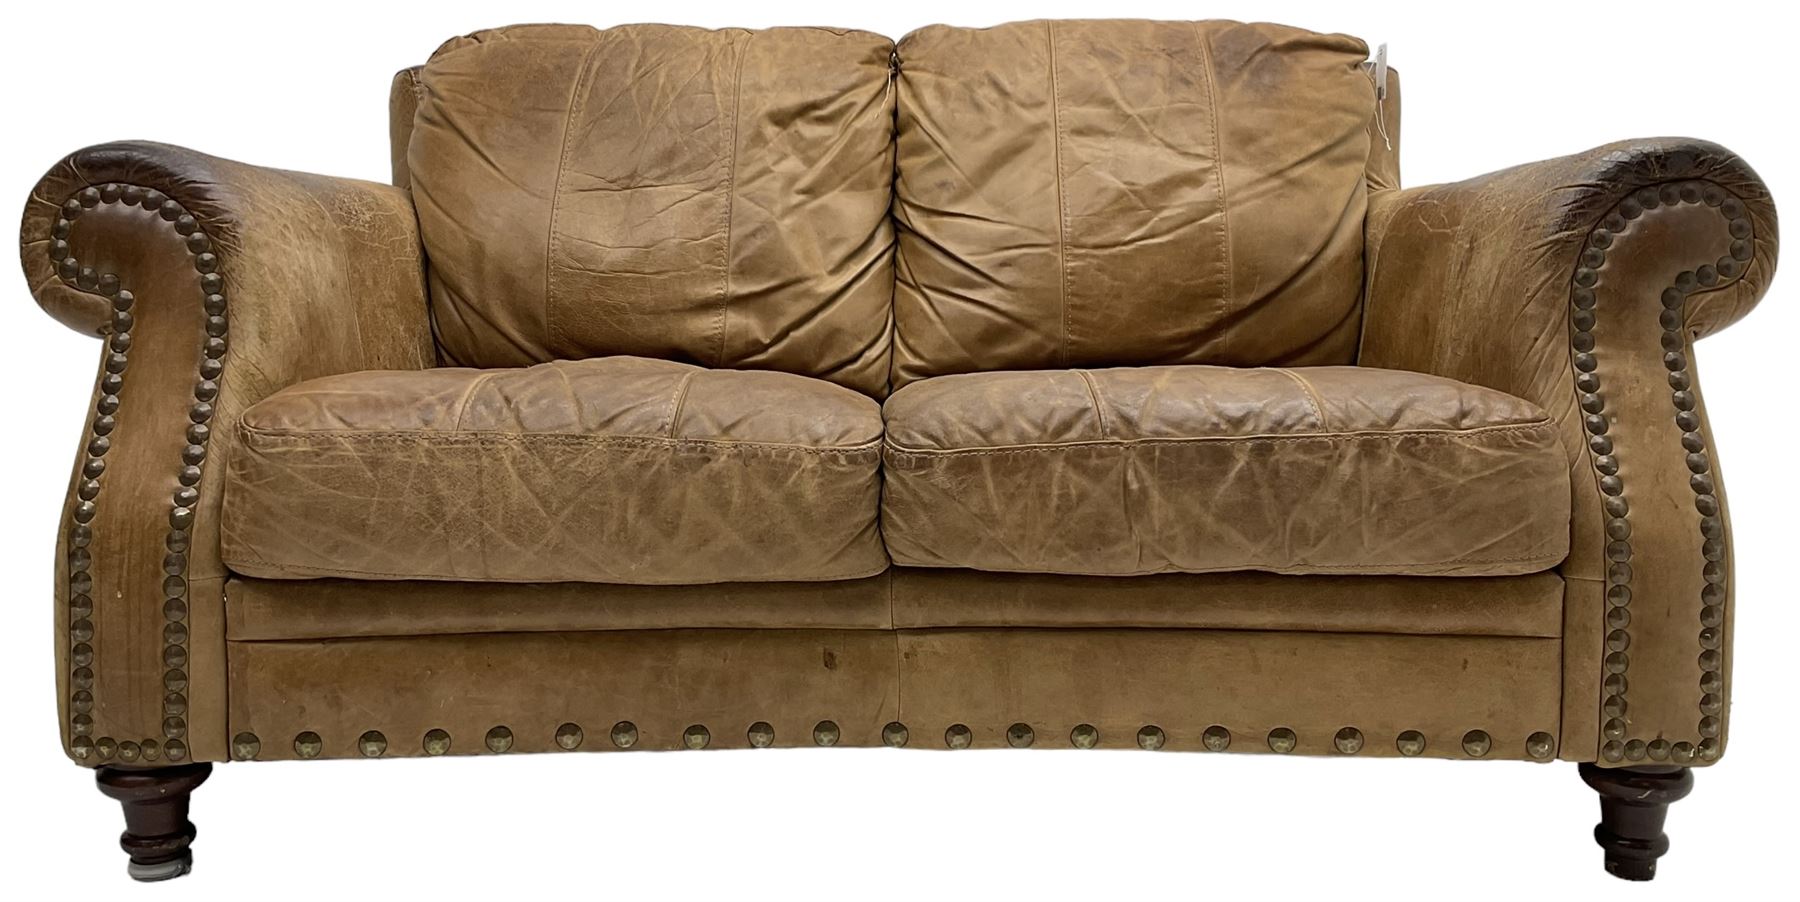 Two-seat club sofa